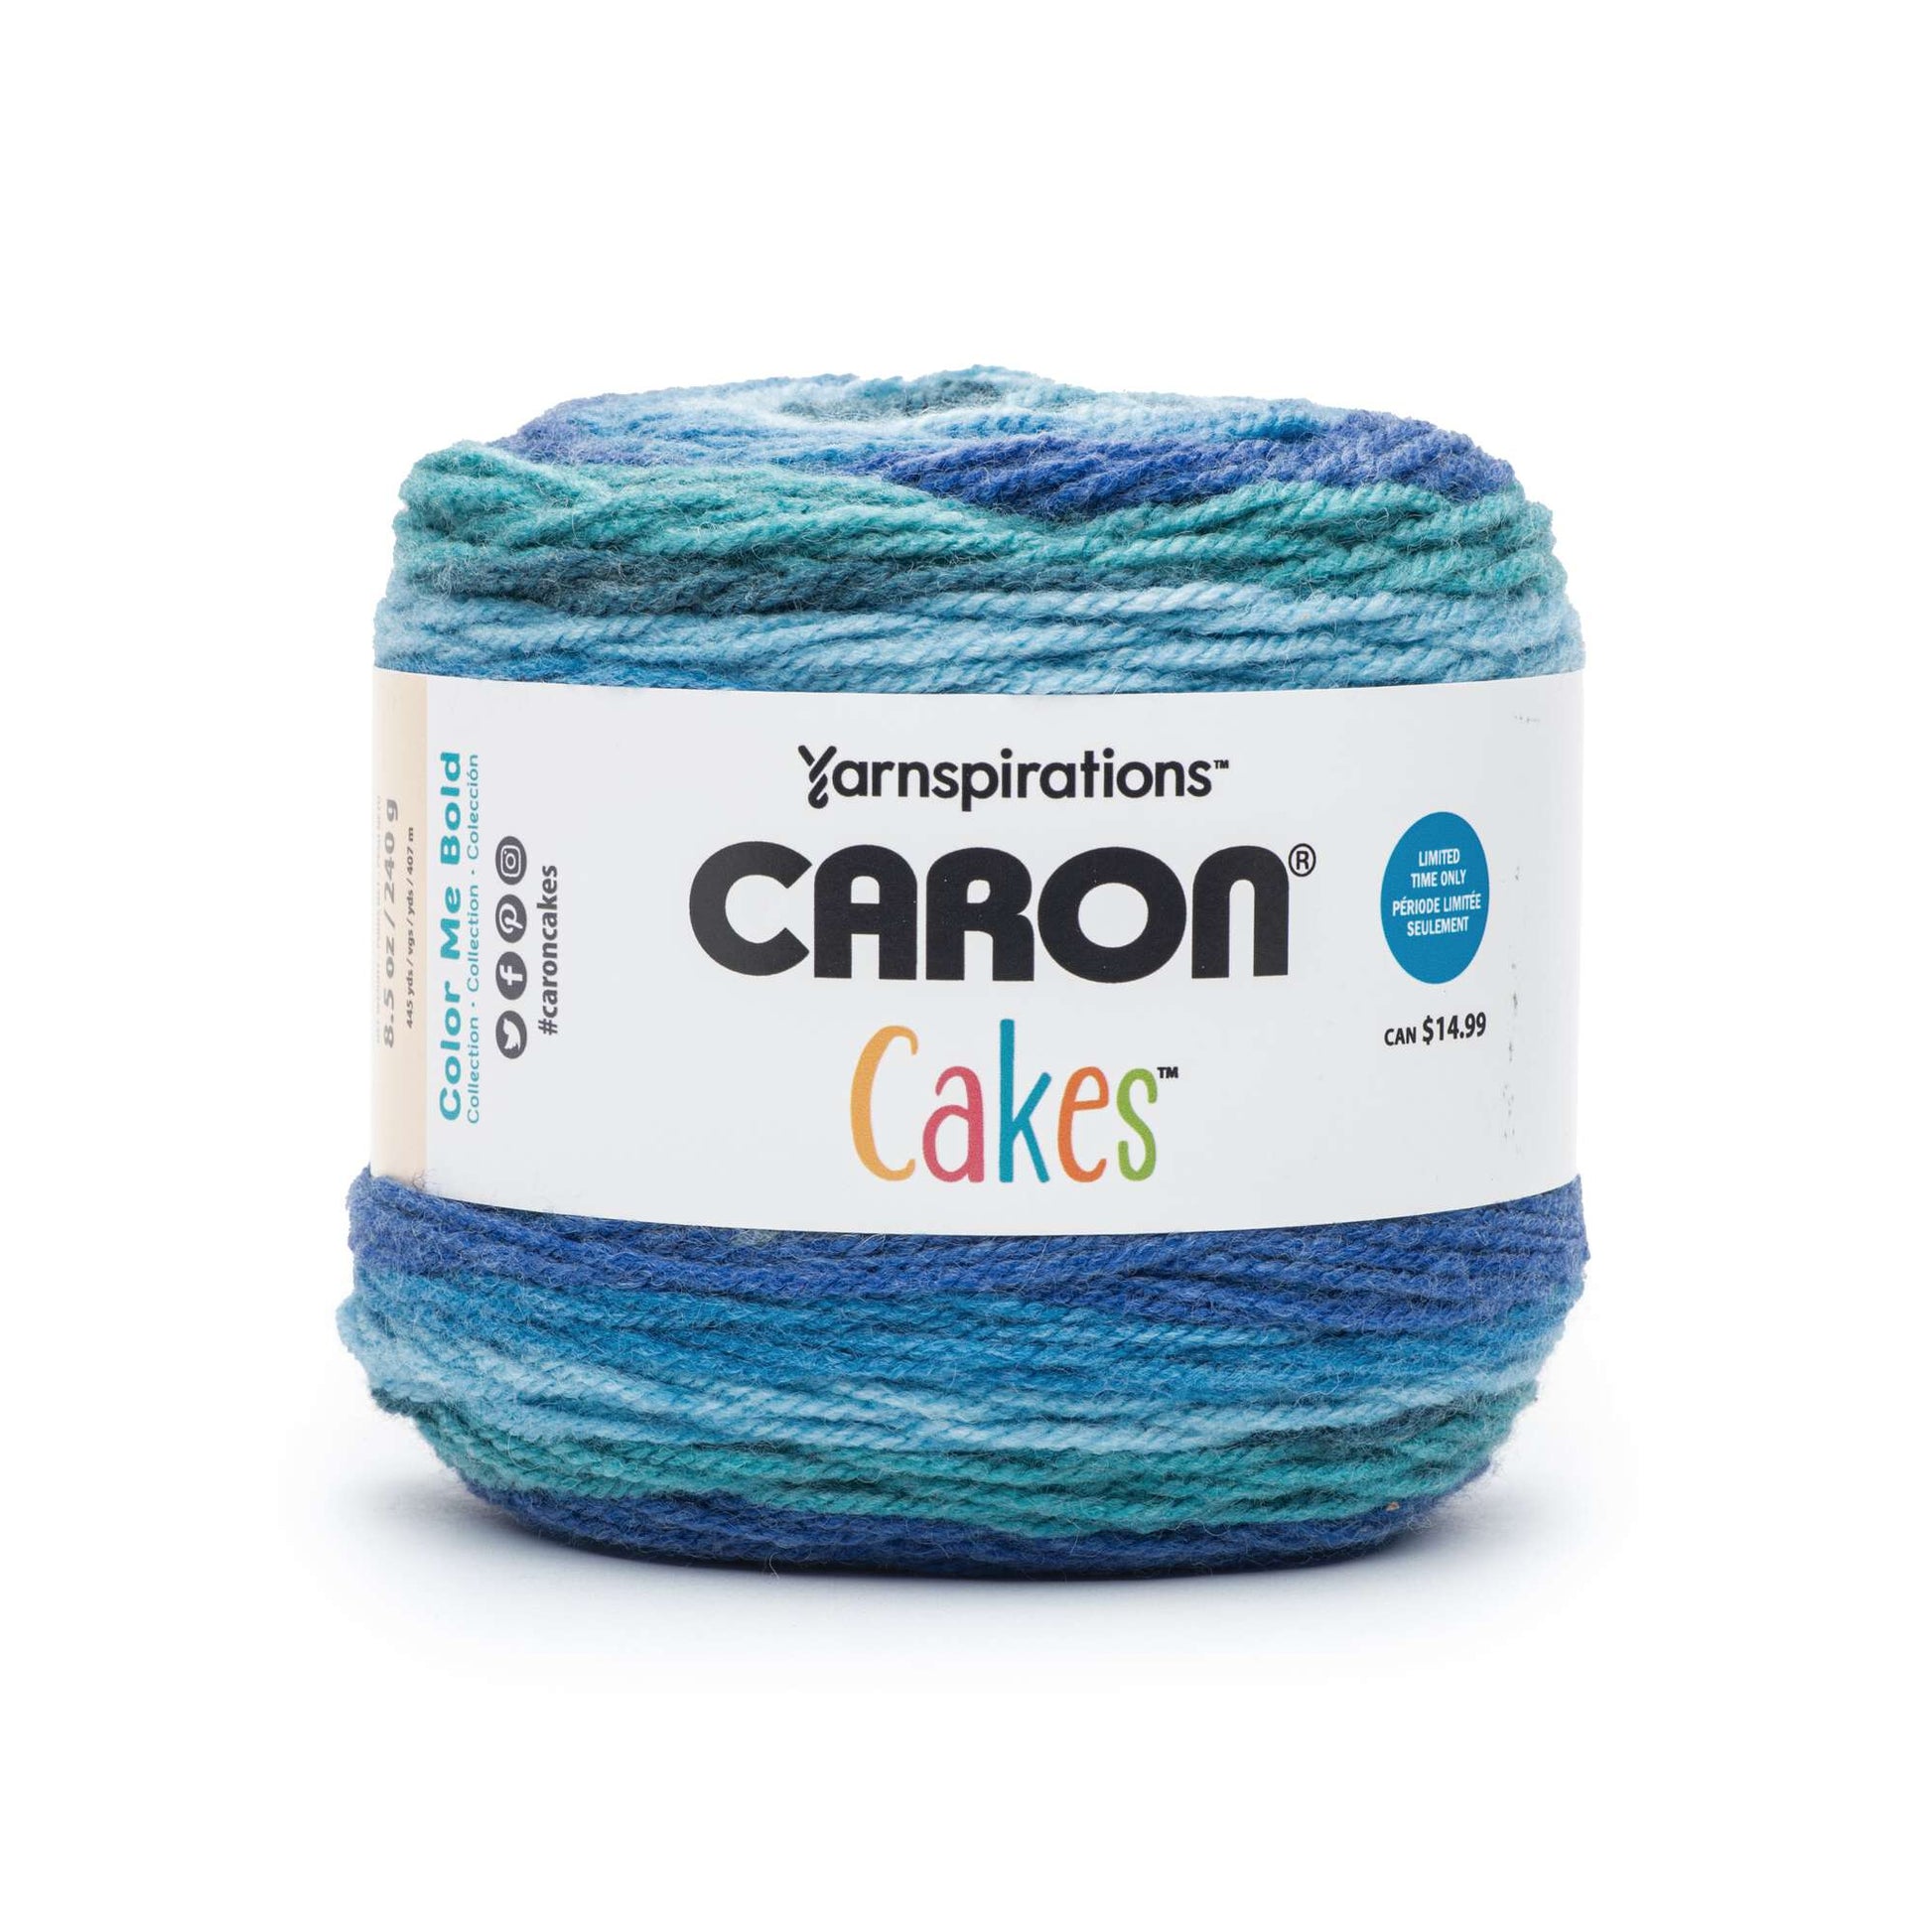 Yarnspirations Caron Cakes Rainbow Sprinkles Yarn 4 Weight 7.1 Oz Skein 383  Yds for sale online